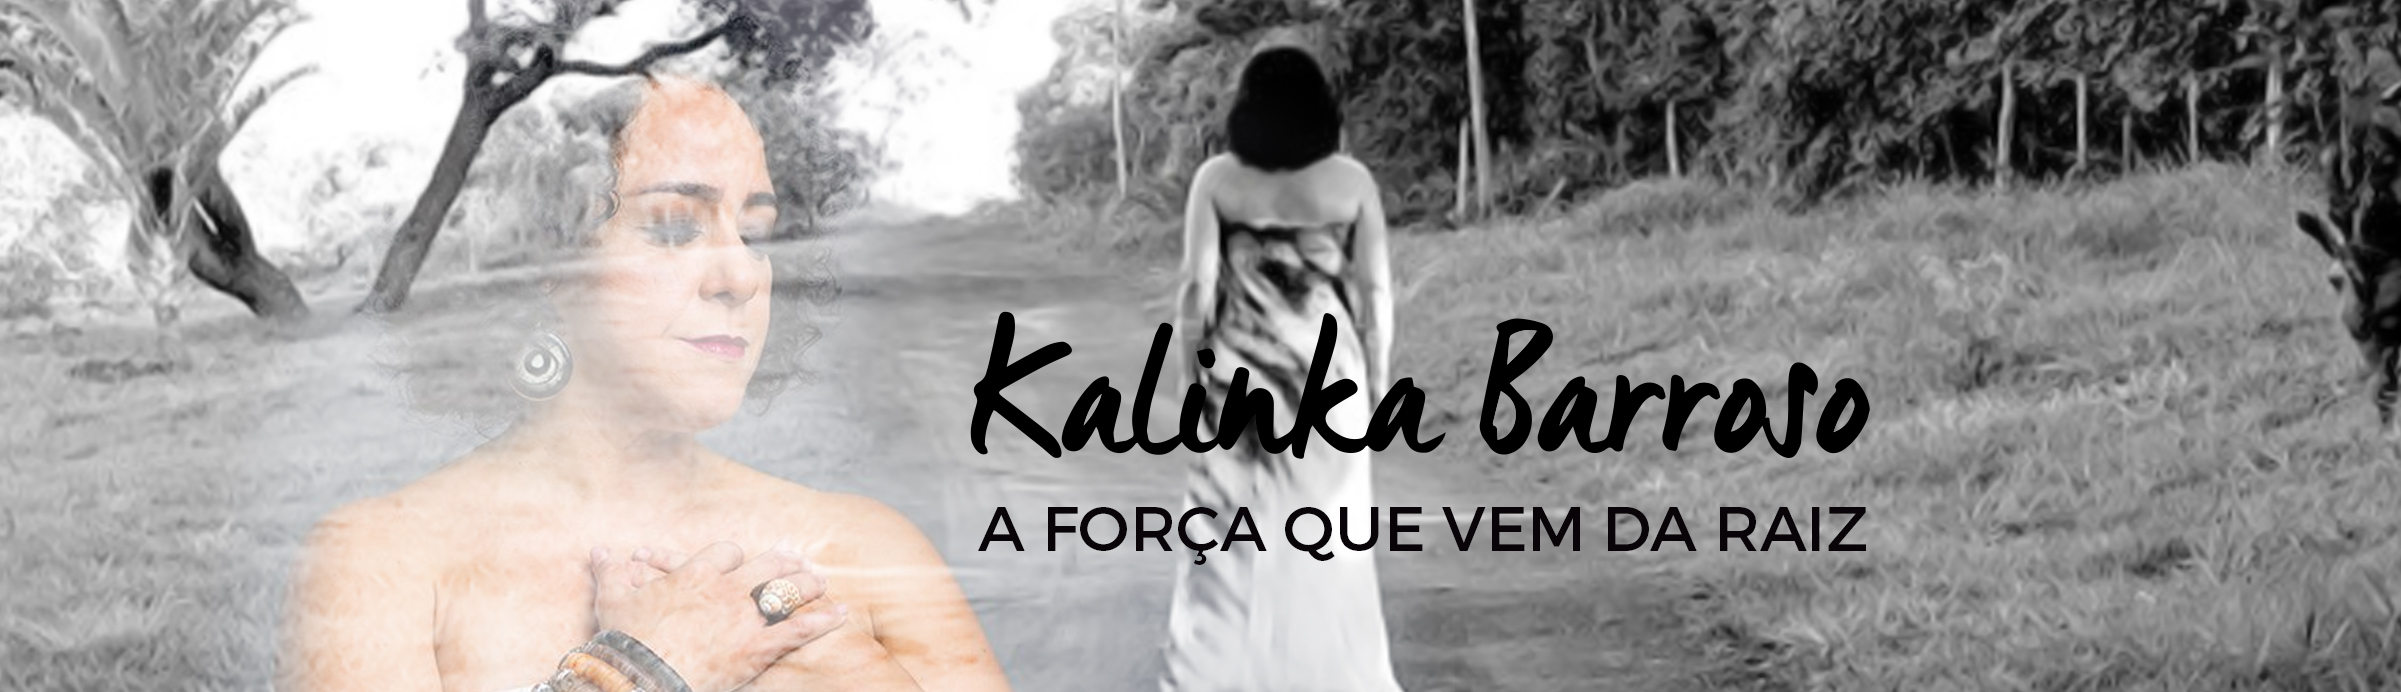 Kalinka consagra Roque Ferreira